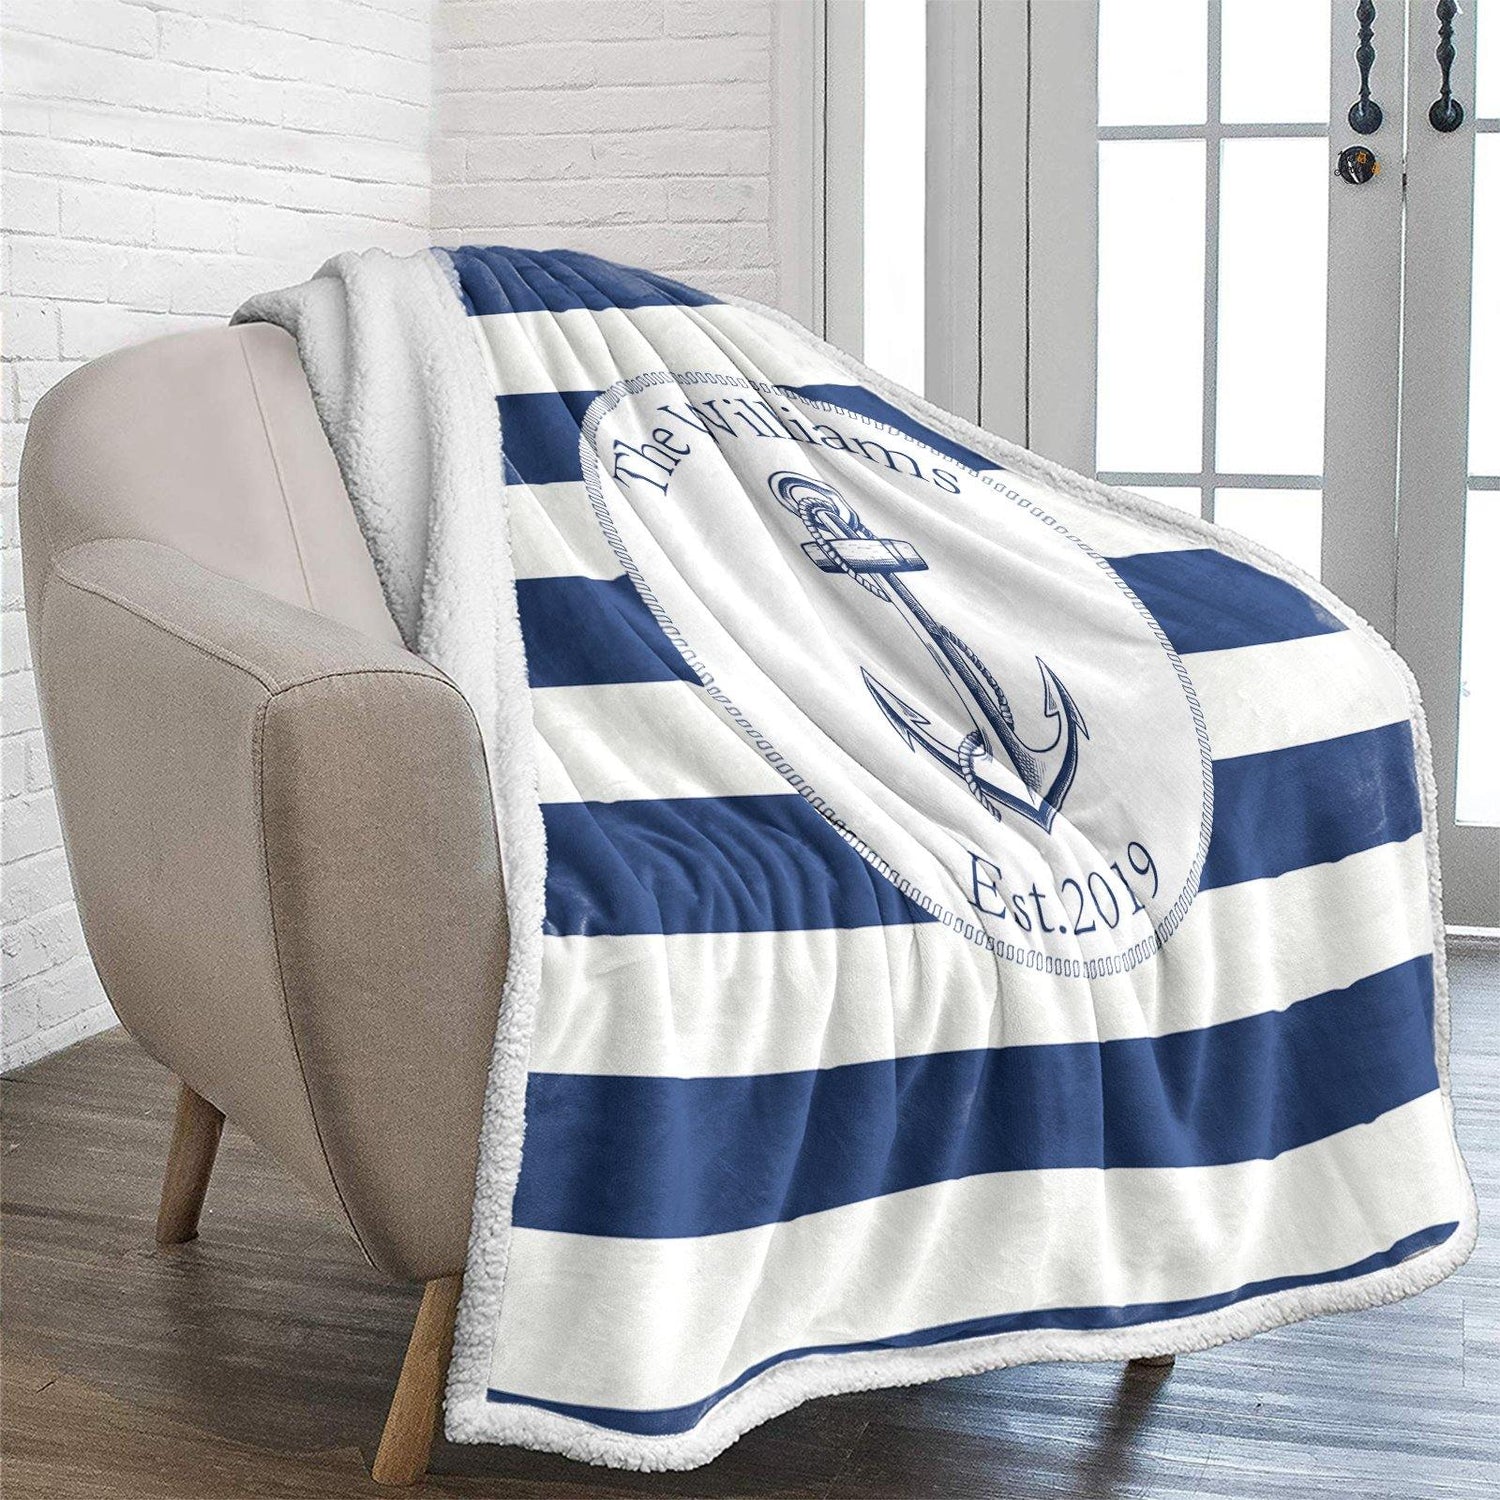 WONGS BEDDING Blue and white striped anchor fleece blanket bedroom living room decoration blanket - Wongs bedding